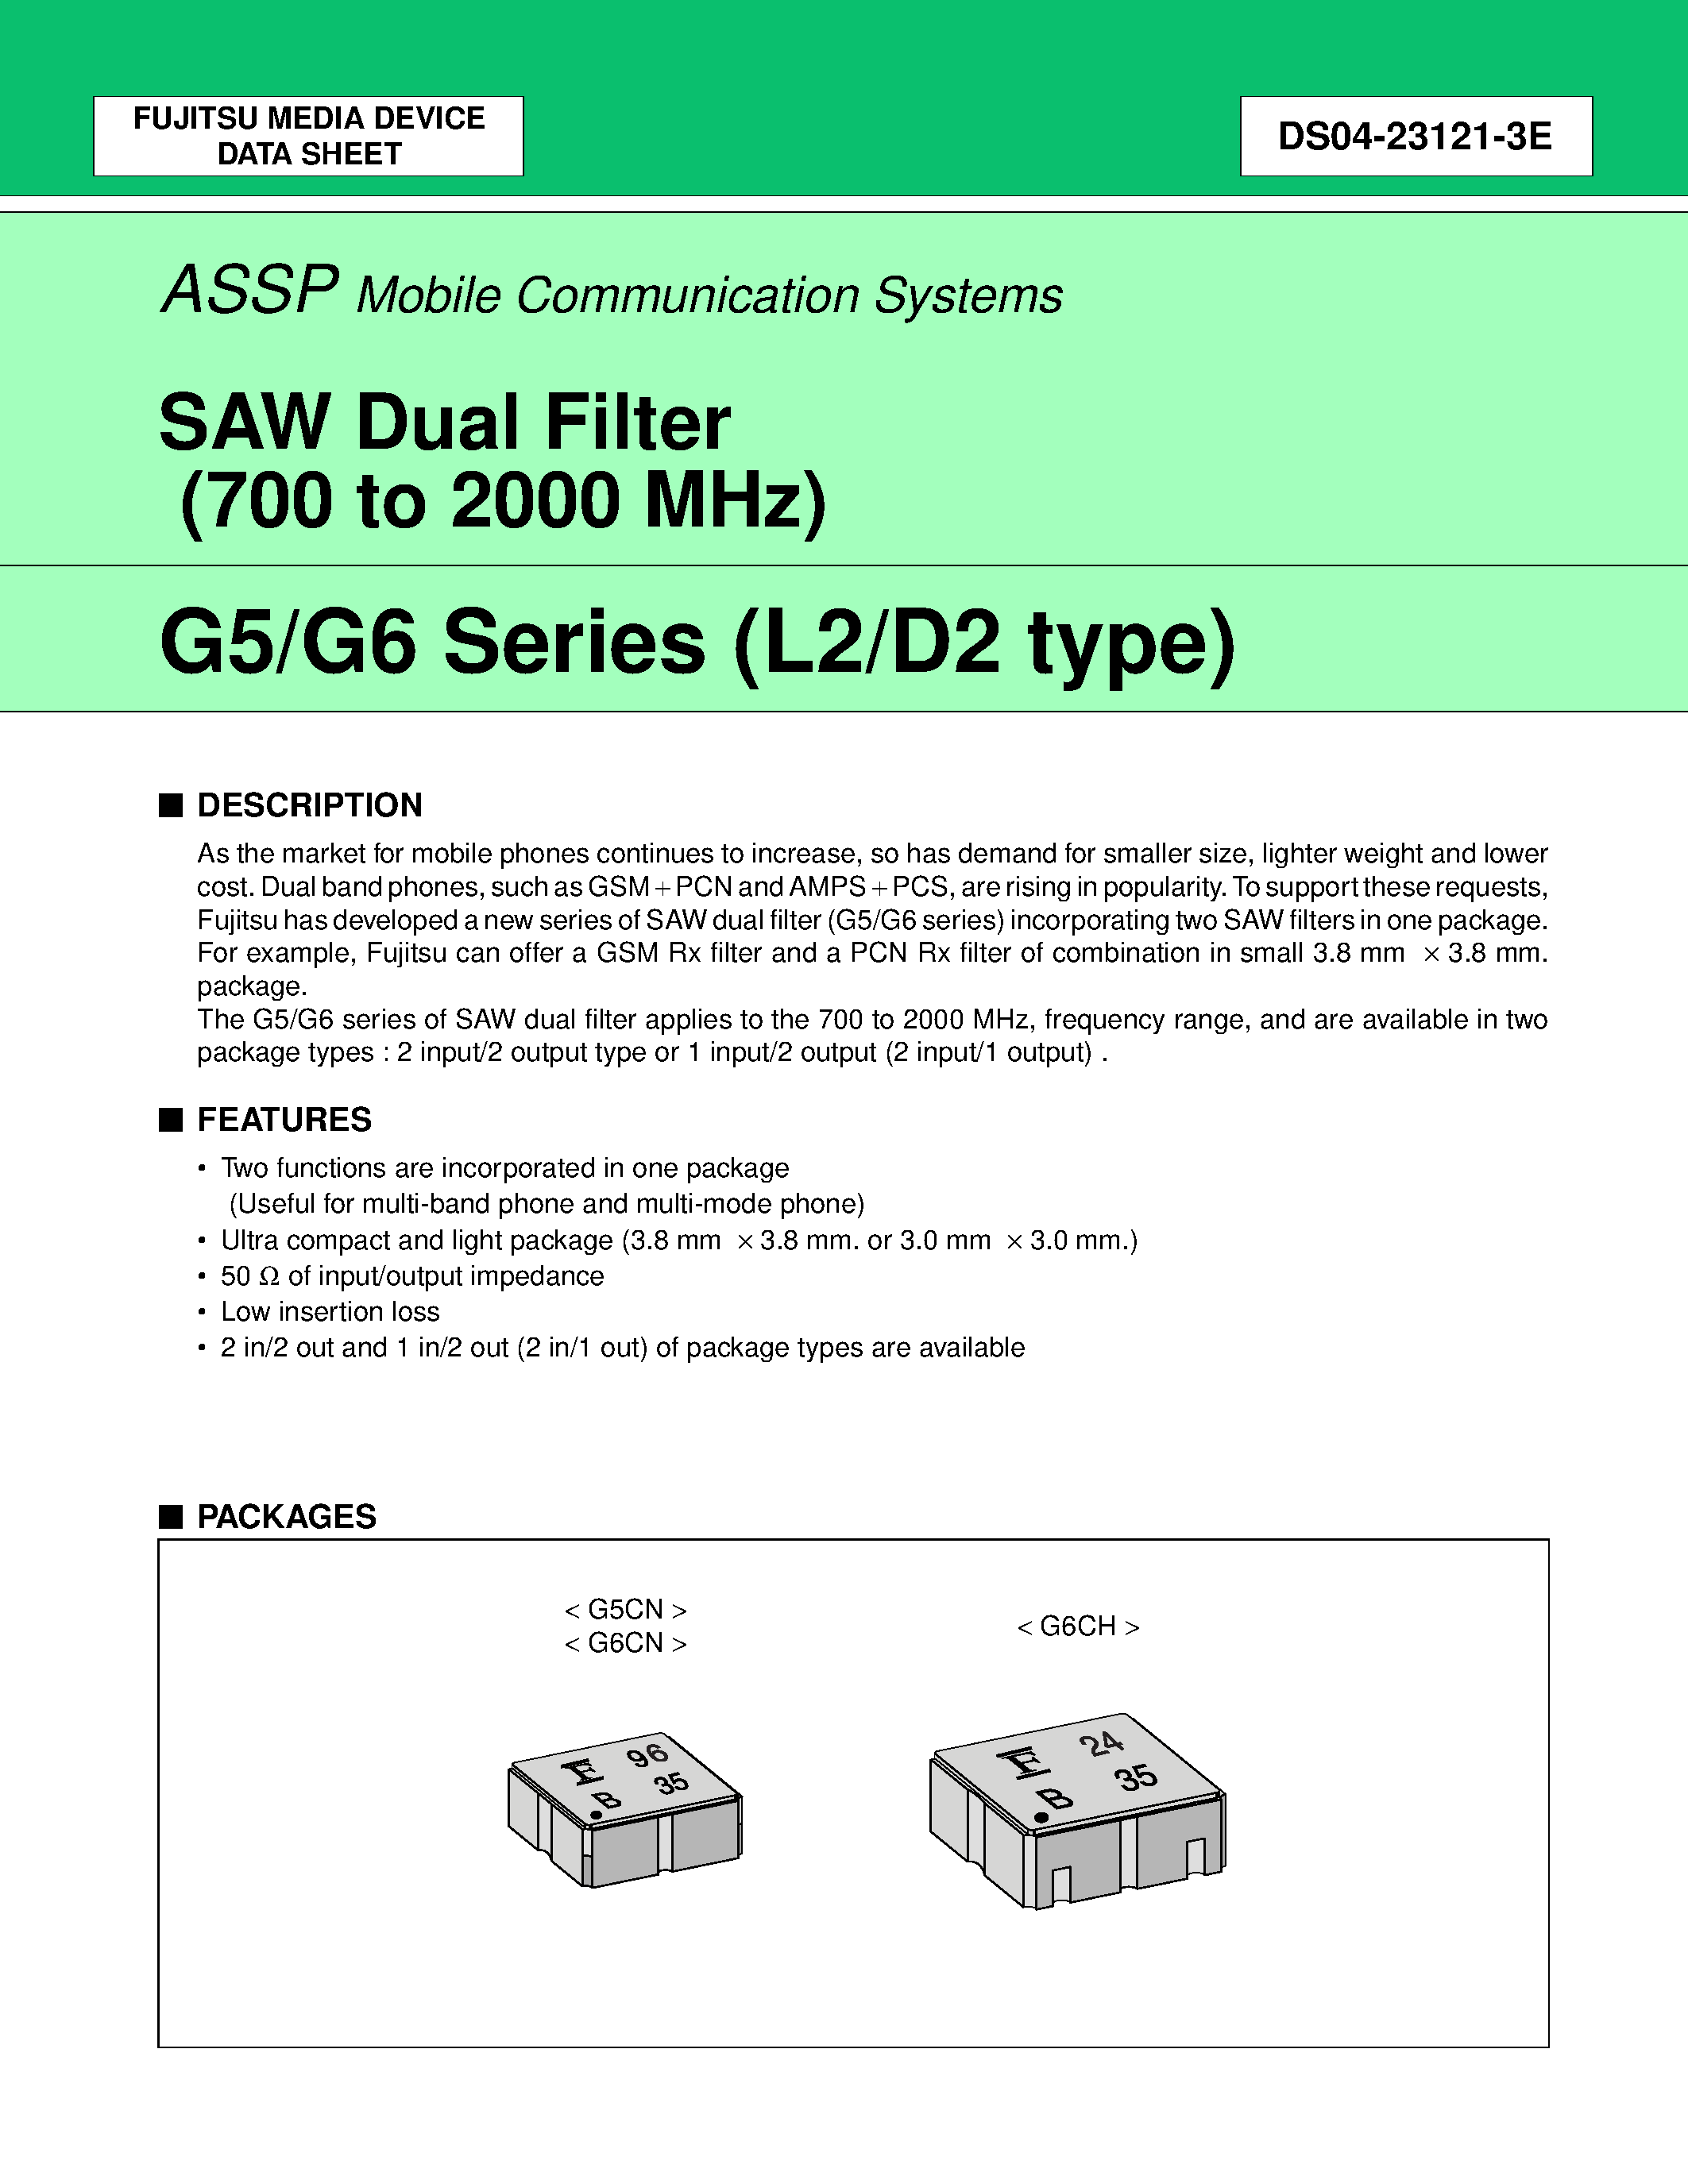 Даташит FAR-G5CN-942M50-D296-U - SAW Dual Filter (700 to 2000 MHz) страница 1